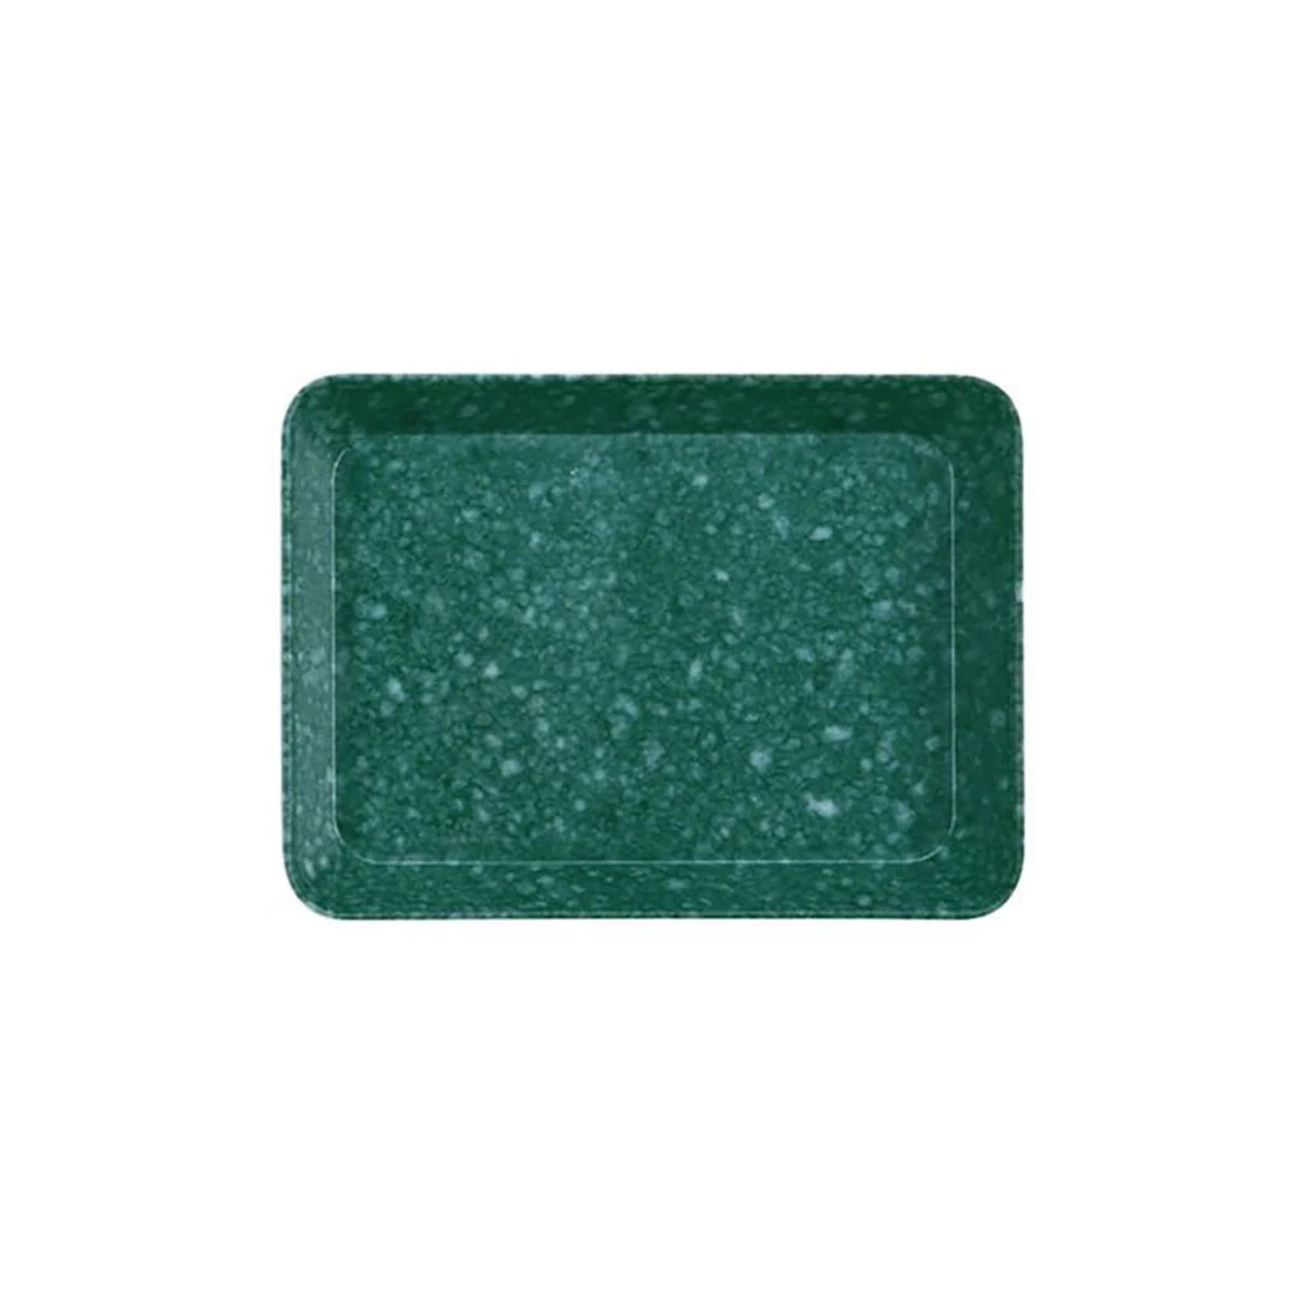 Hightide Melamine Marbled Tablett S grün